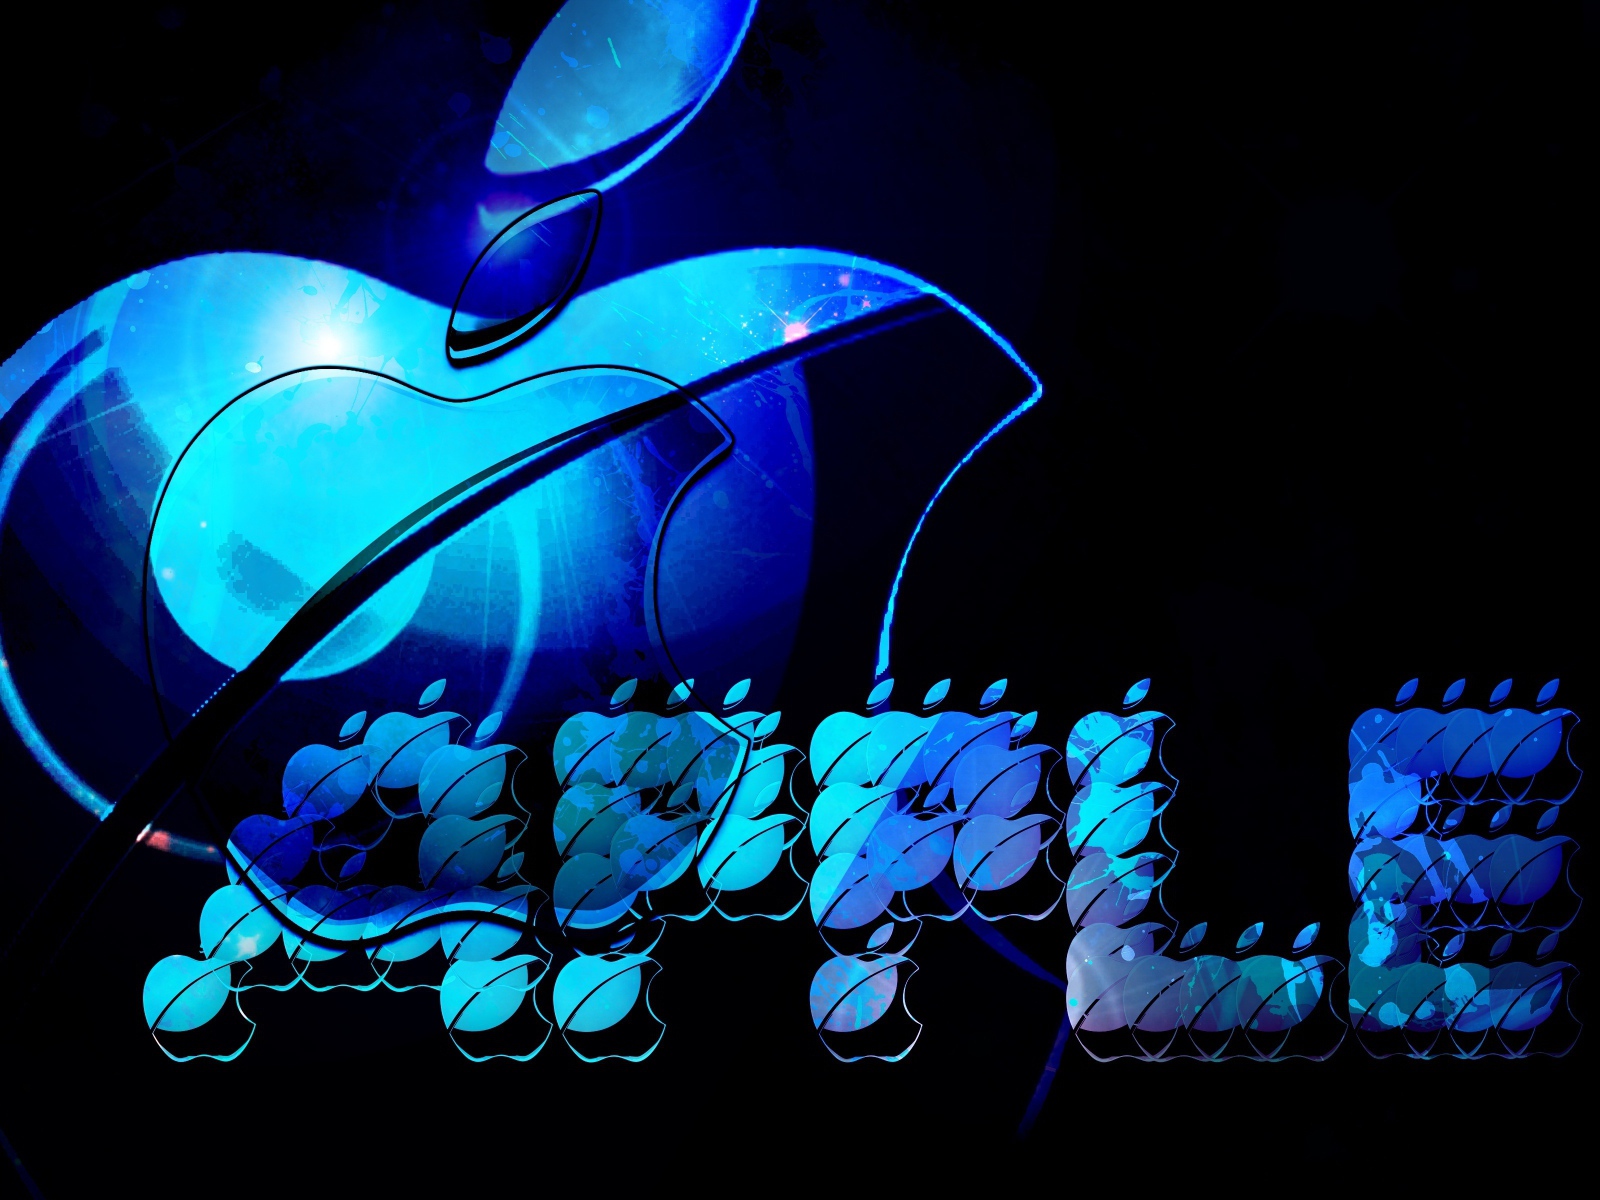 Blue neon Apple logo on a black background